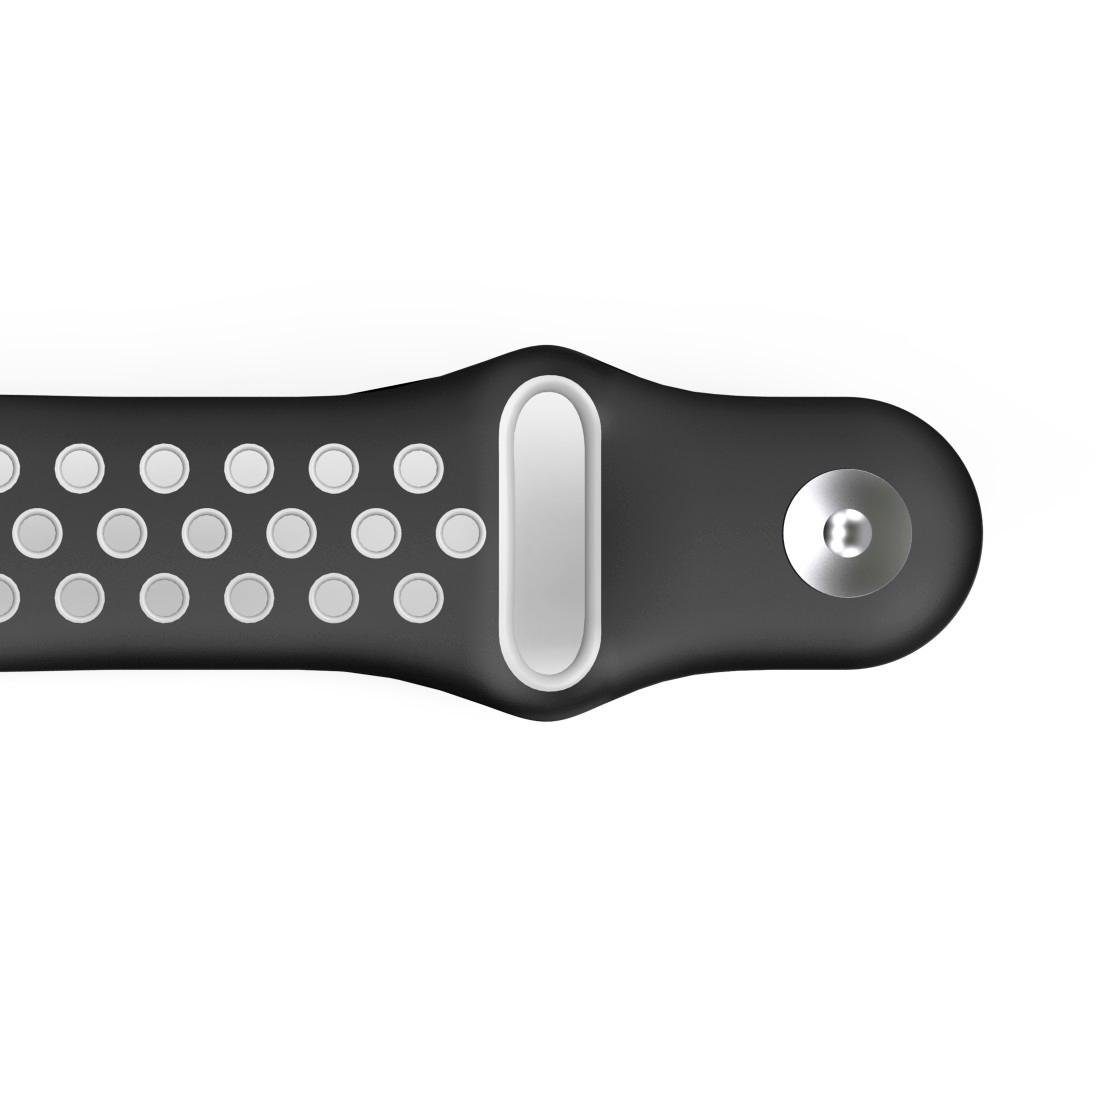 Smartwatch-Armband Lite, schwarz 2/Versa/Versa Fitbit 22mm Versa Hama atmungsaktives Ersatzarmband